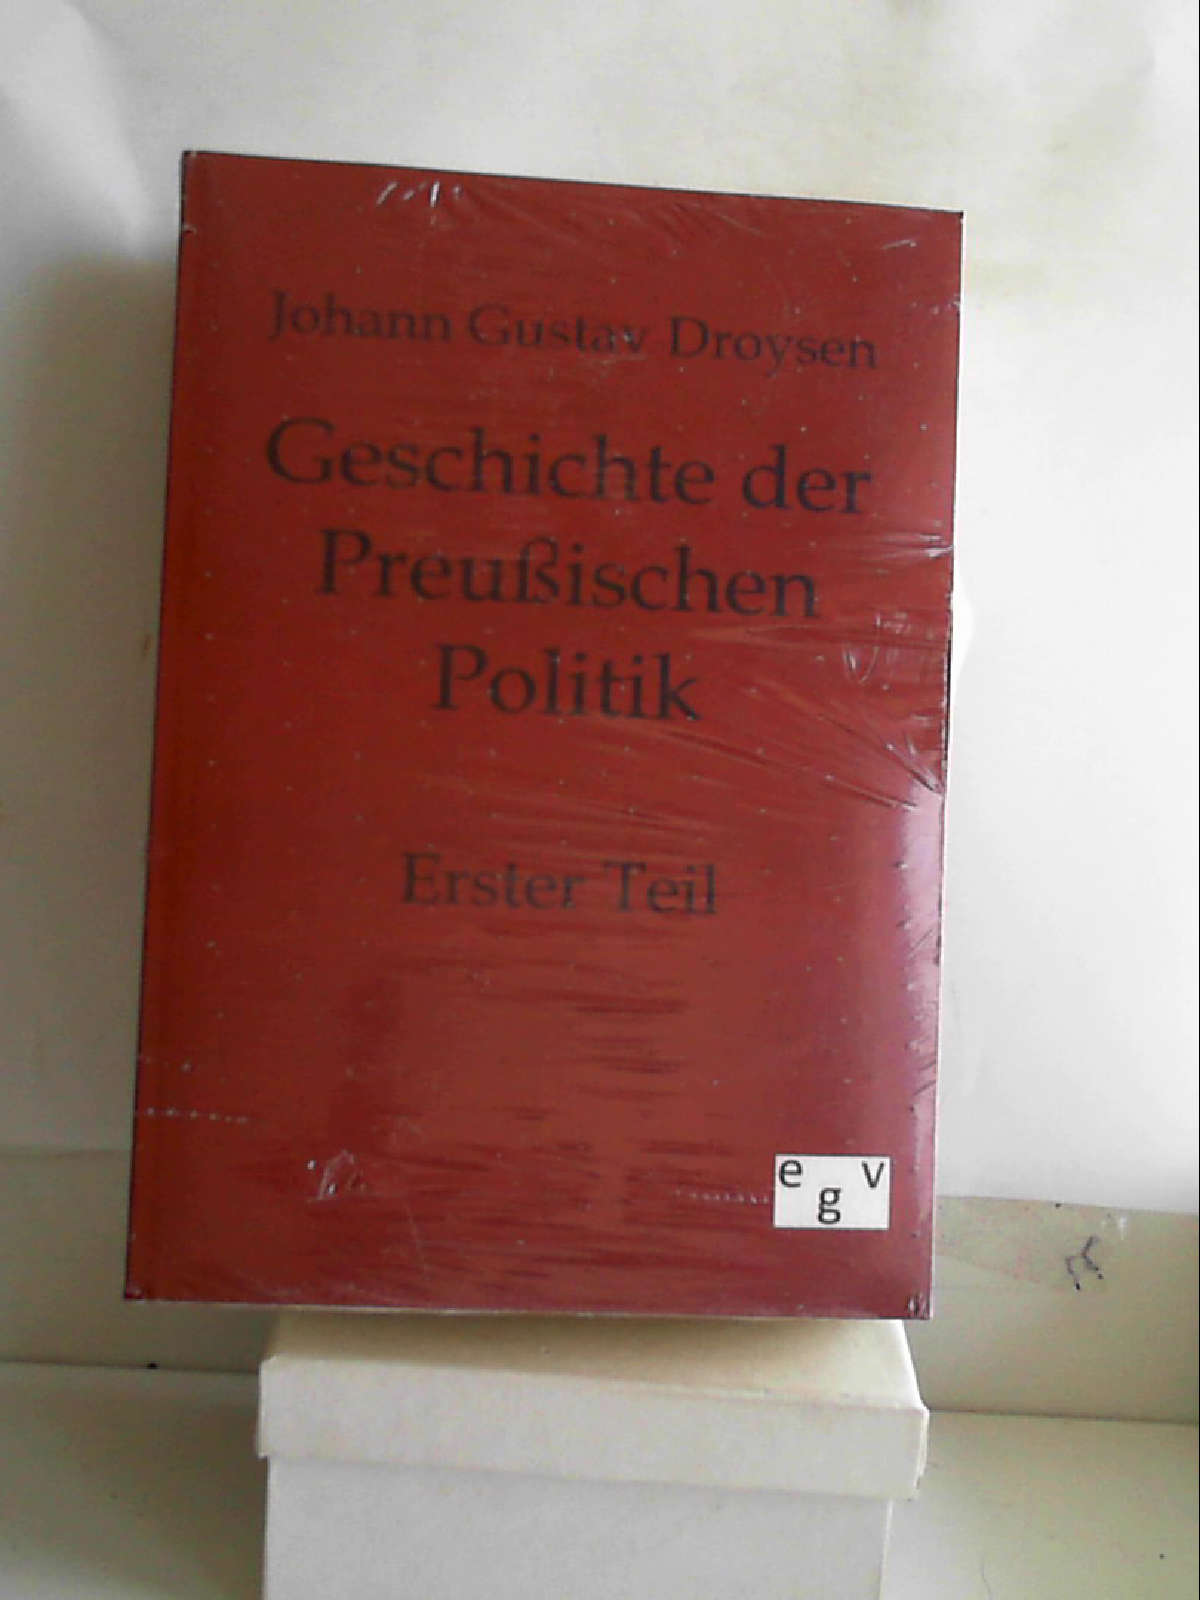 Geschichte der Preußischen Politik: Erster Teil [Paperback] [Jun 15, 2011] Johann Gustav Droysen - Johann Gustav Droysen